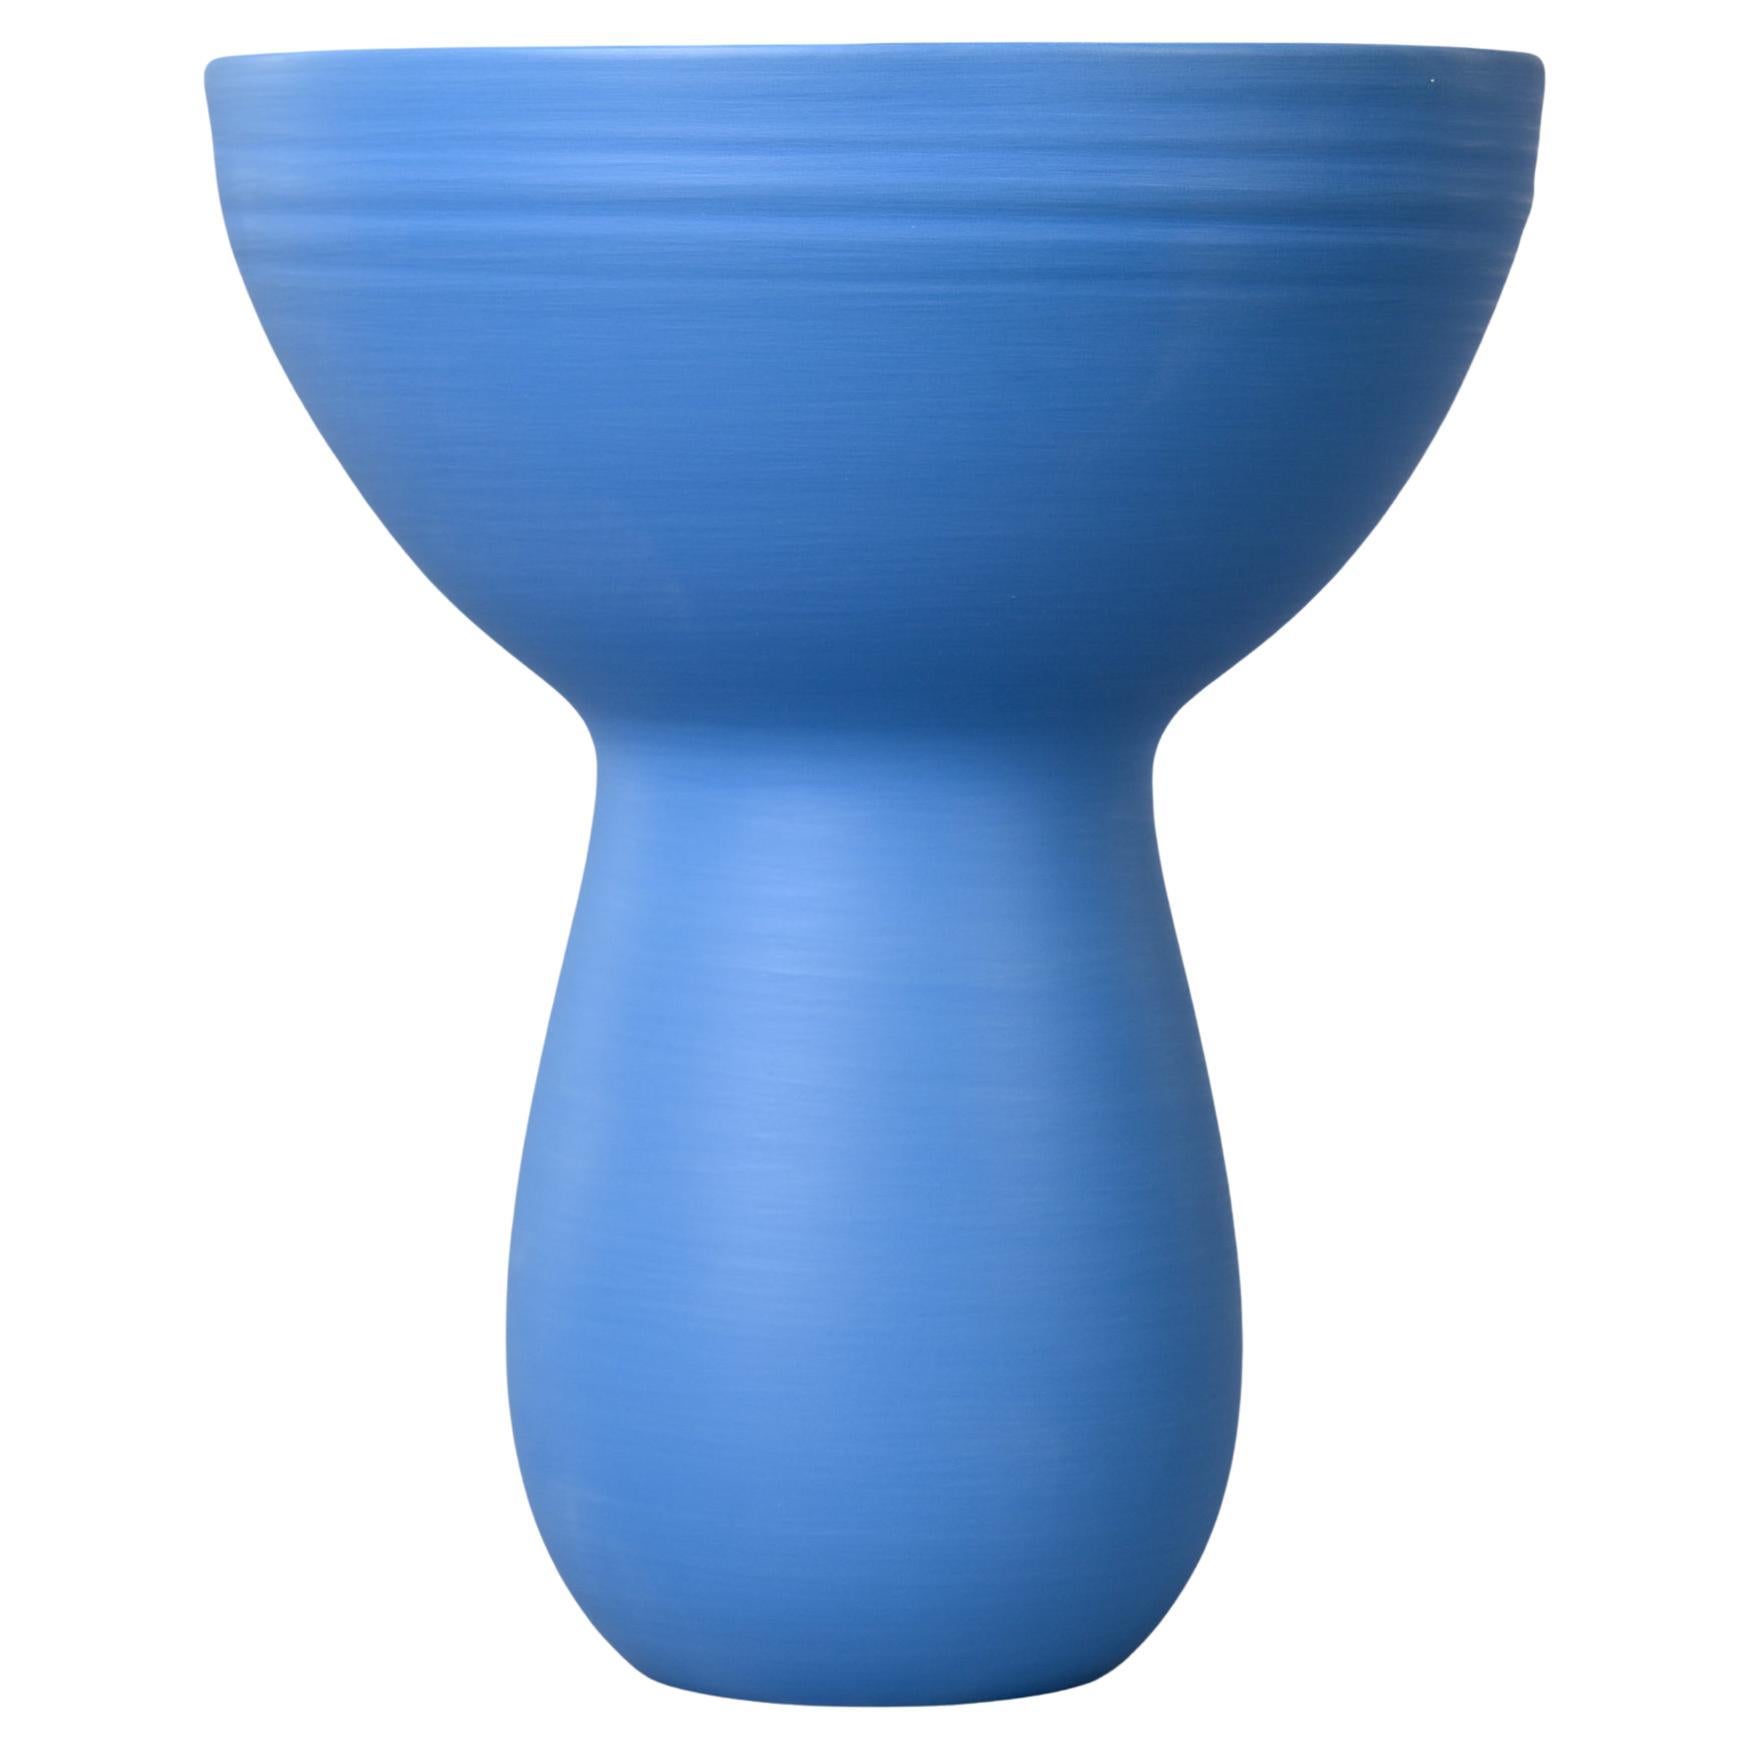 New Rina Menardi Cornflower Blue Small Bouquet Vase